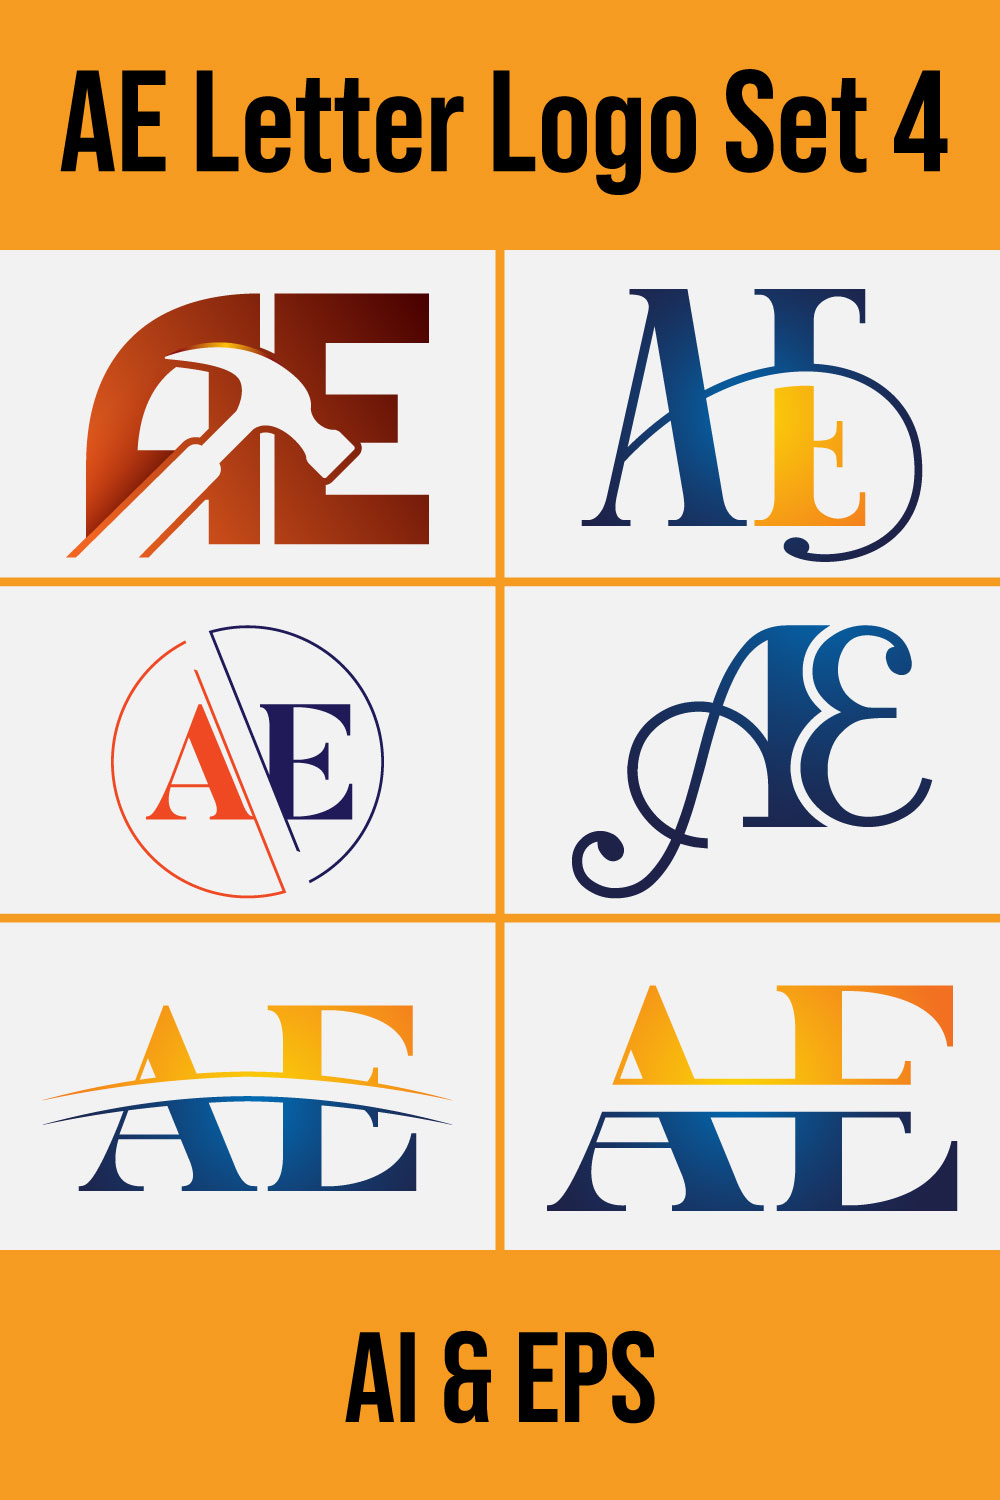 A-E Initial Letter Logo Design pinterest image.